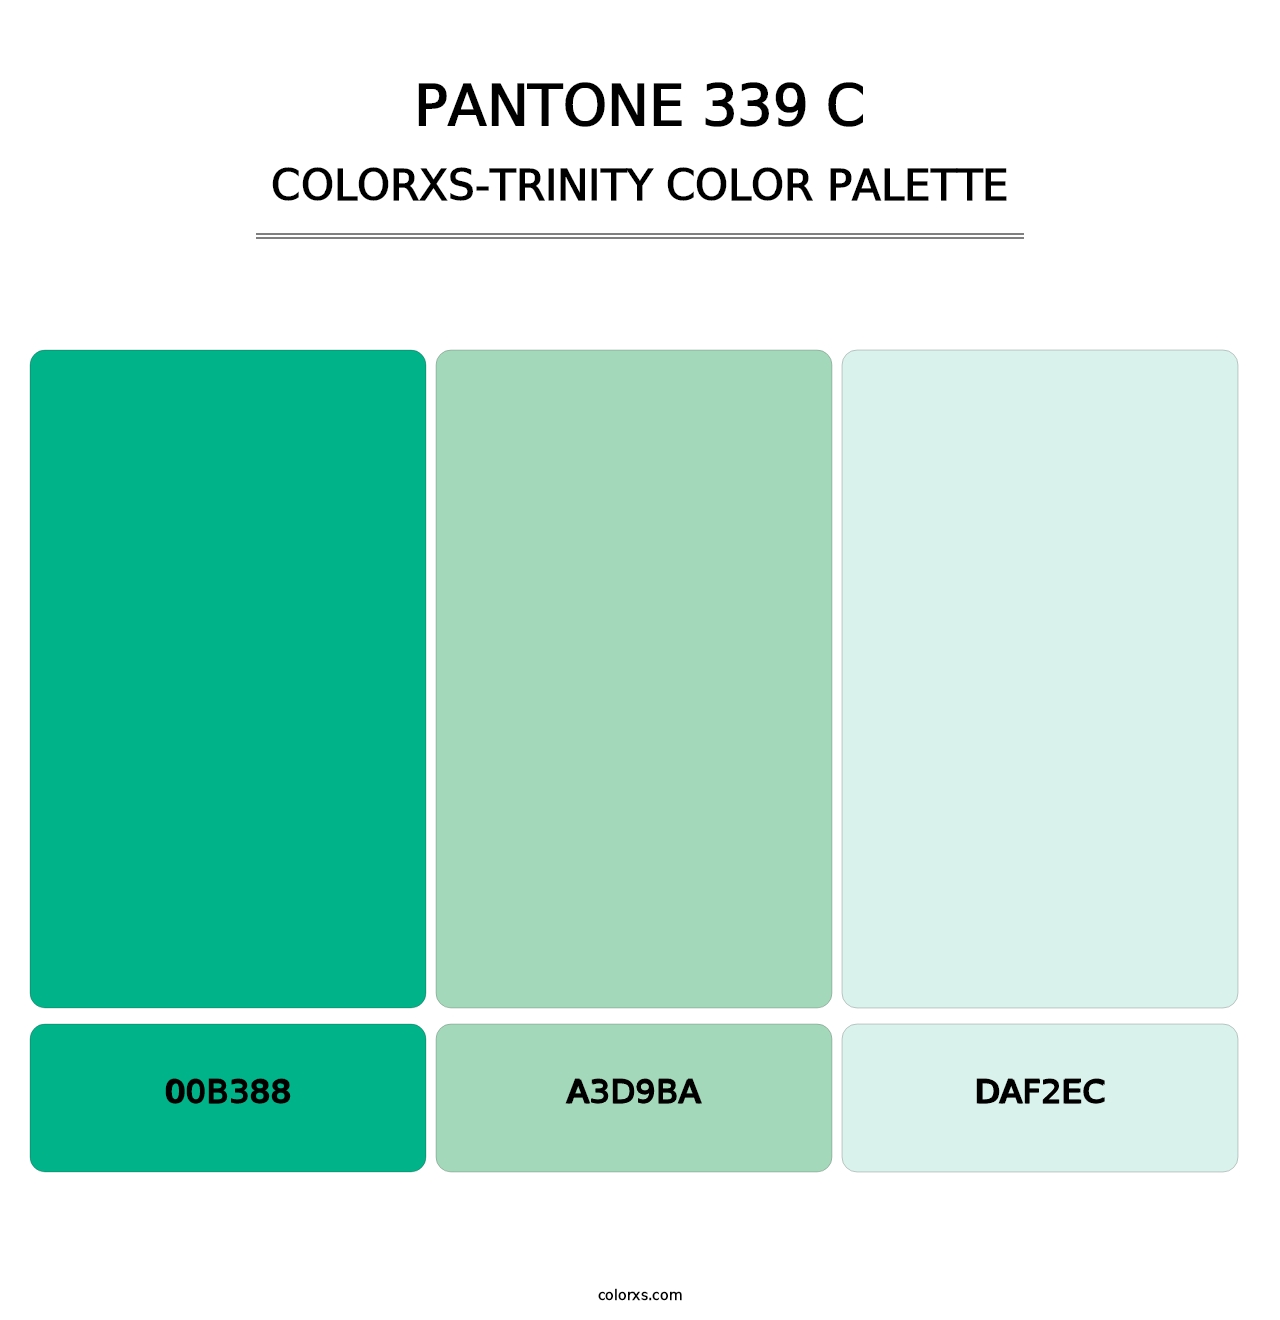 PANTONE 339 C - Colorxs Trinity Palette